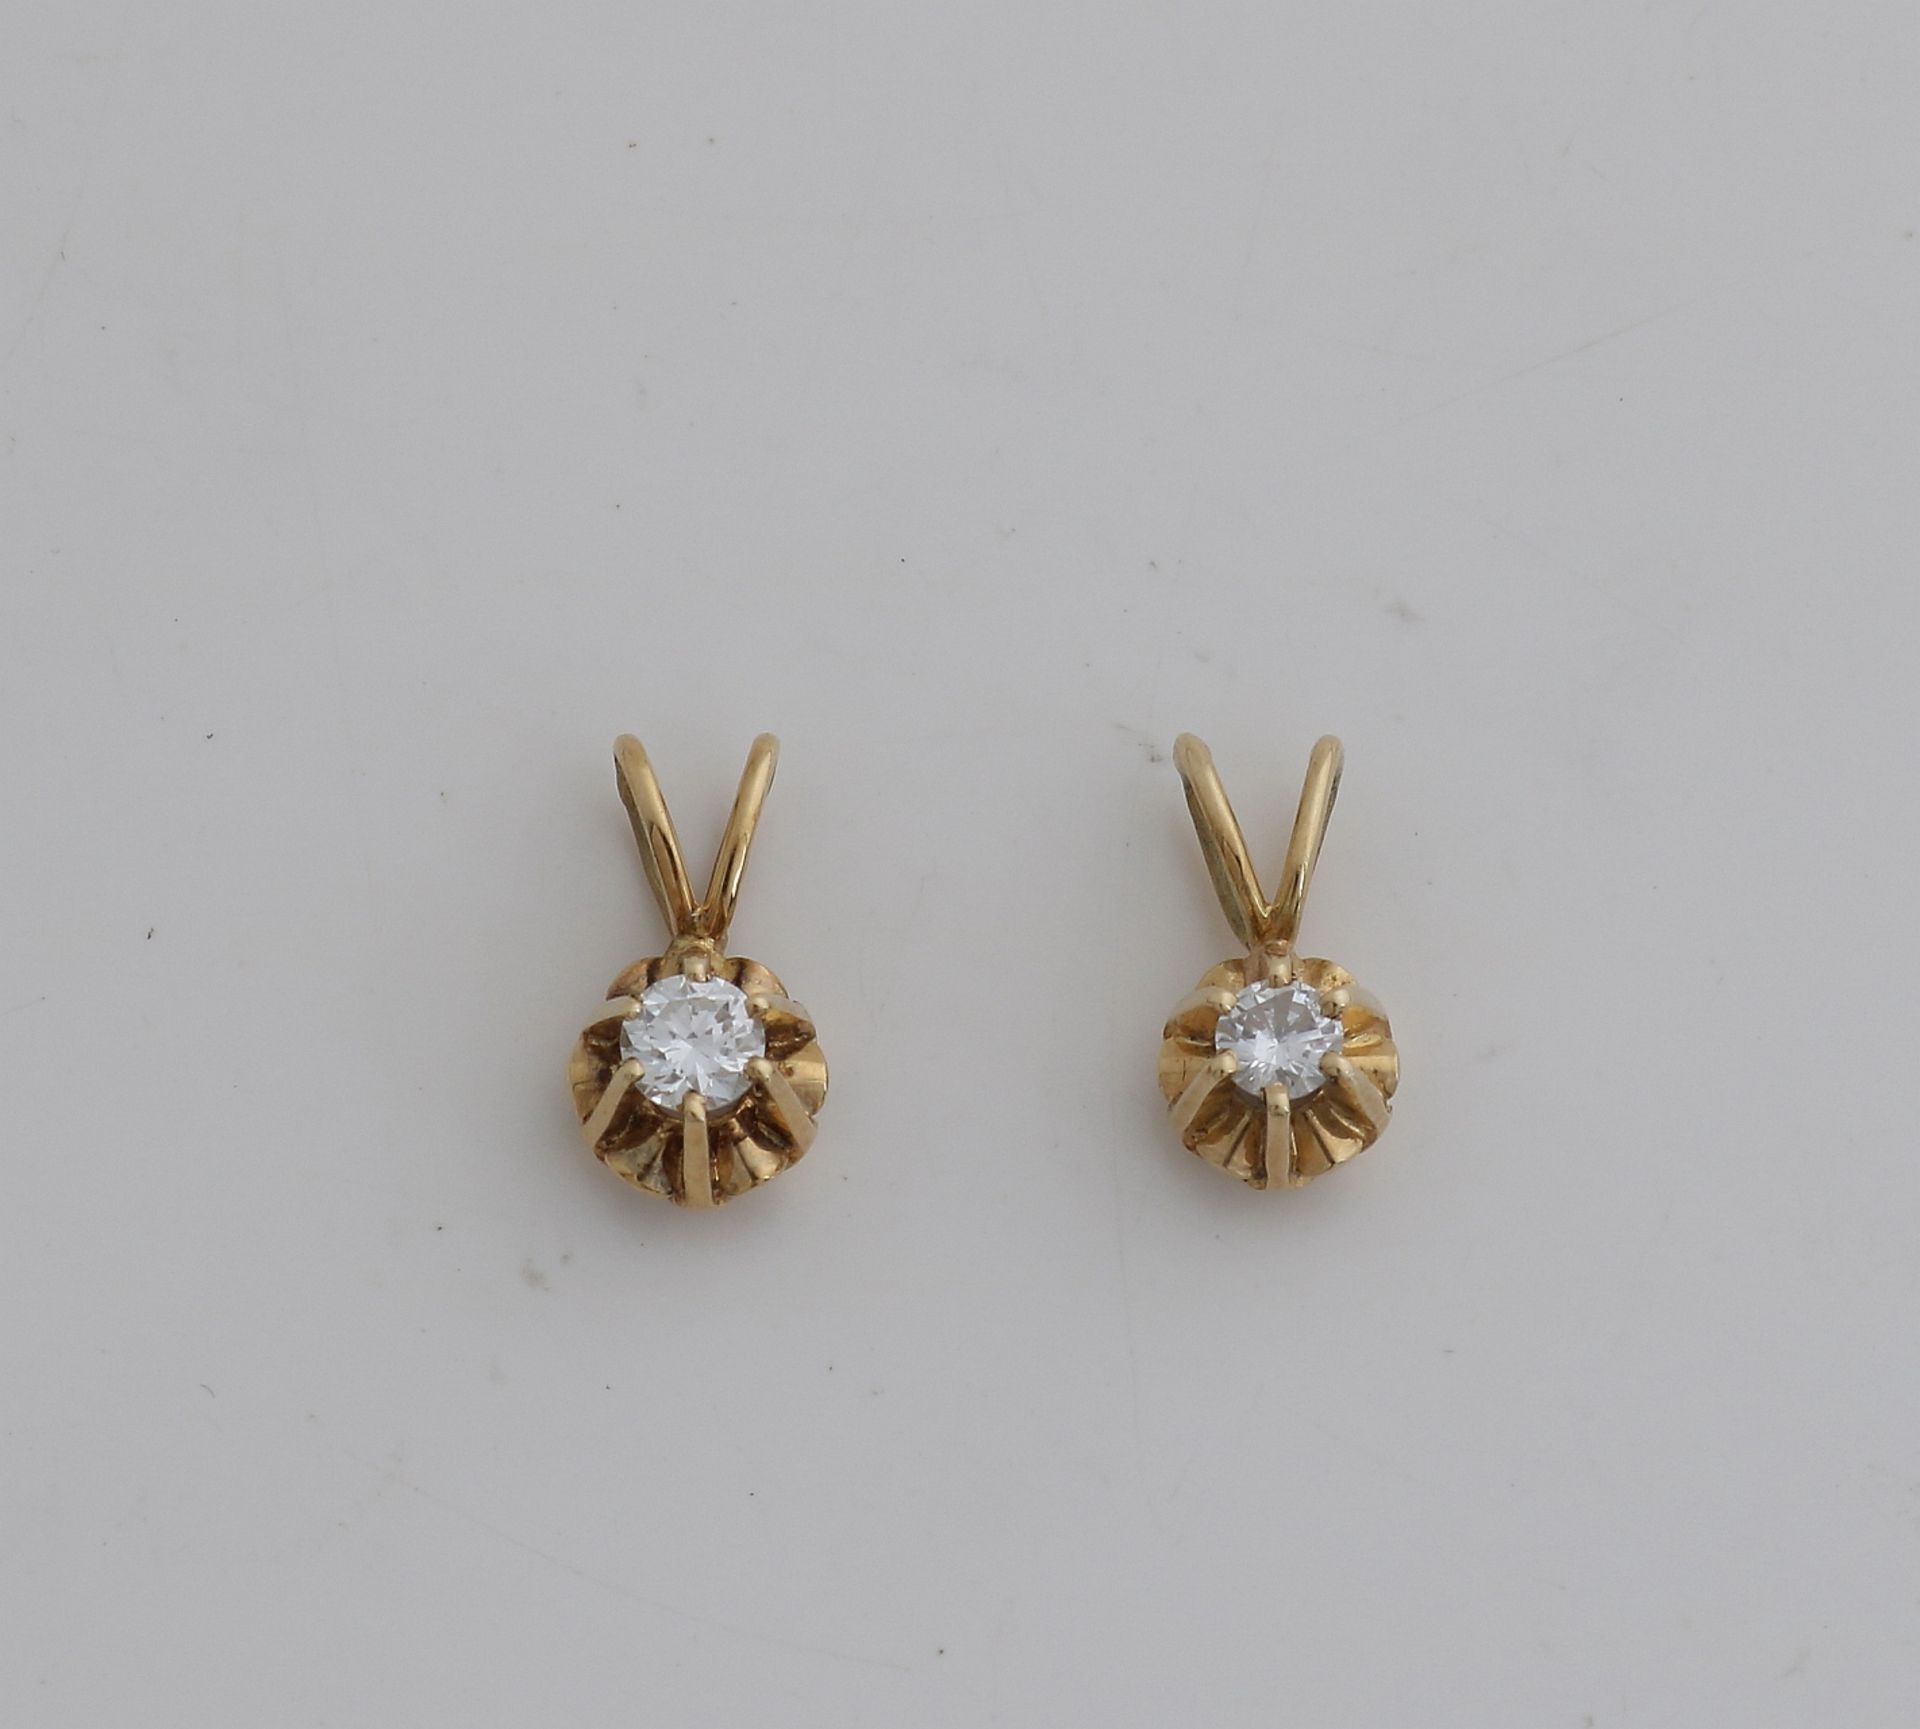 2 Gold pendants with diamonds.